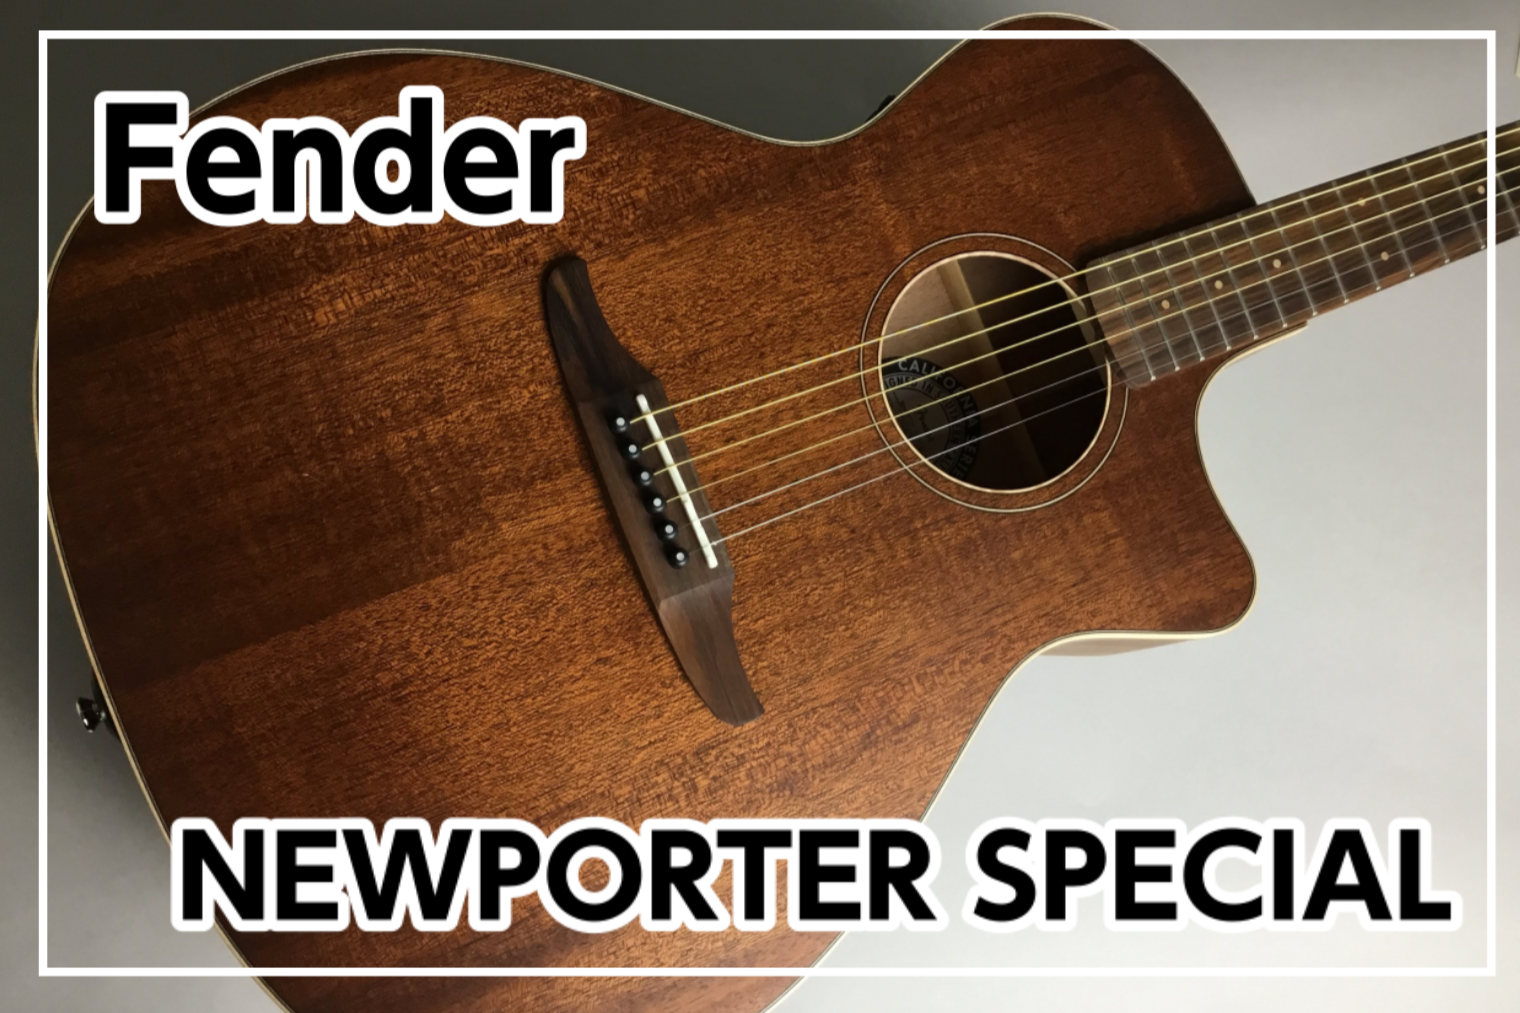 Fender(フェンダー) NEWPORTER SPECIAL入荷!!